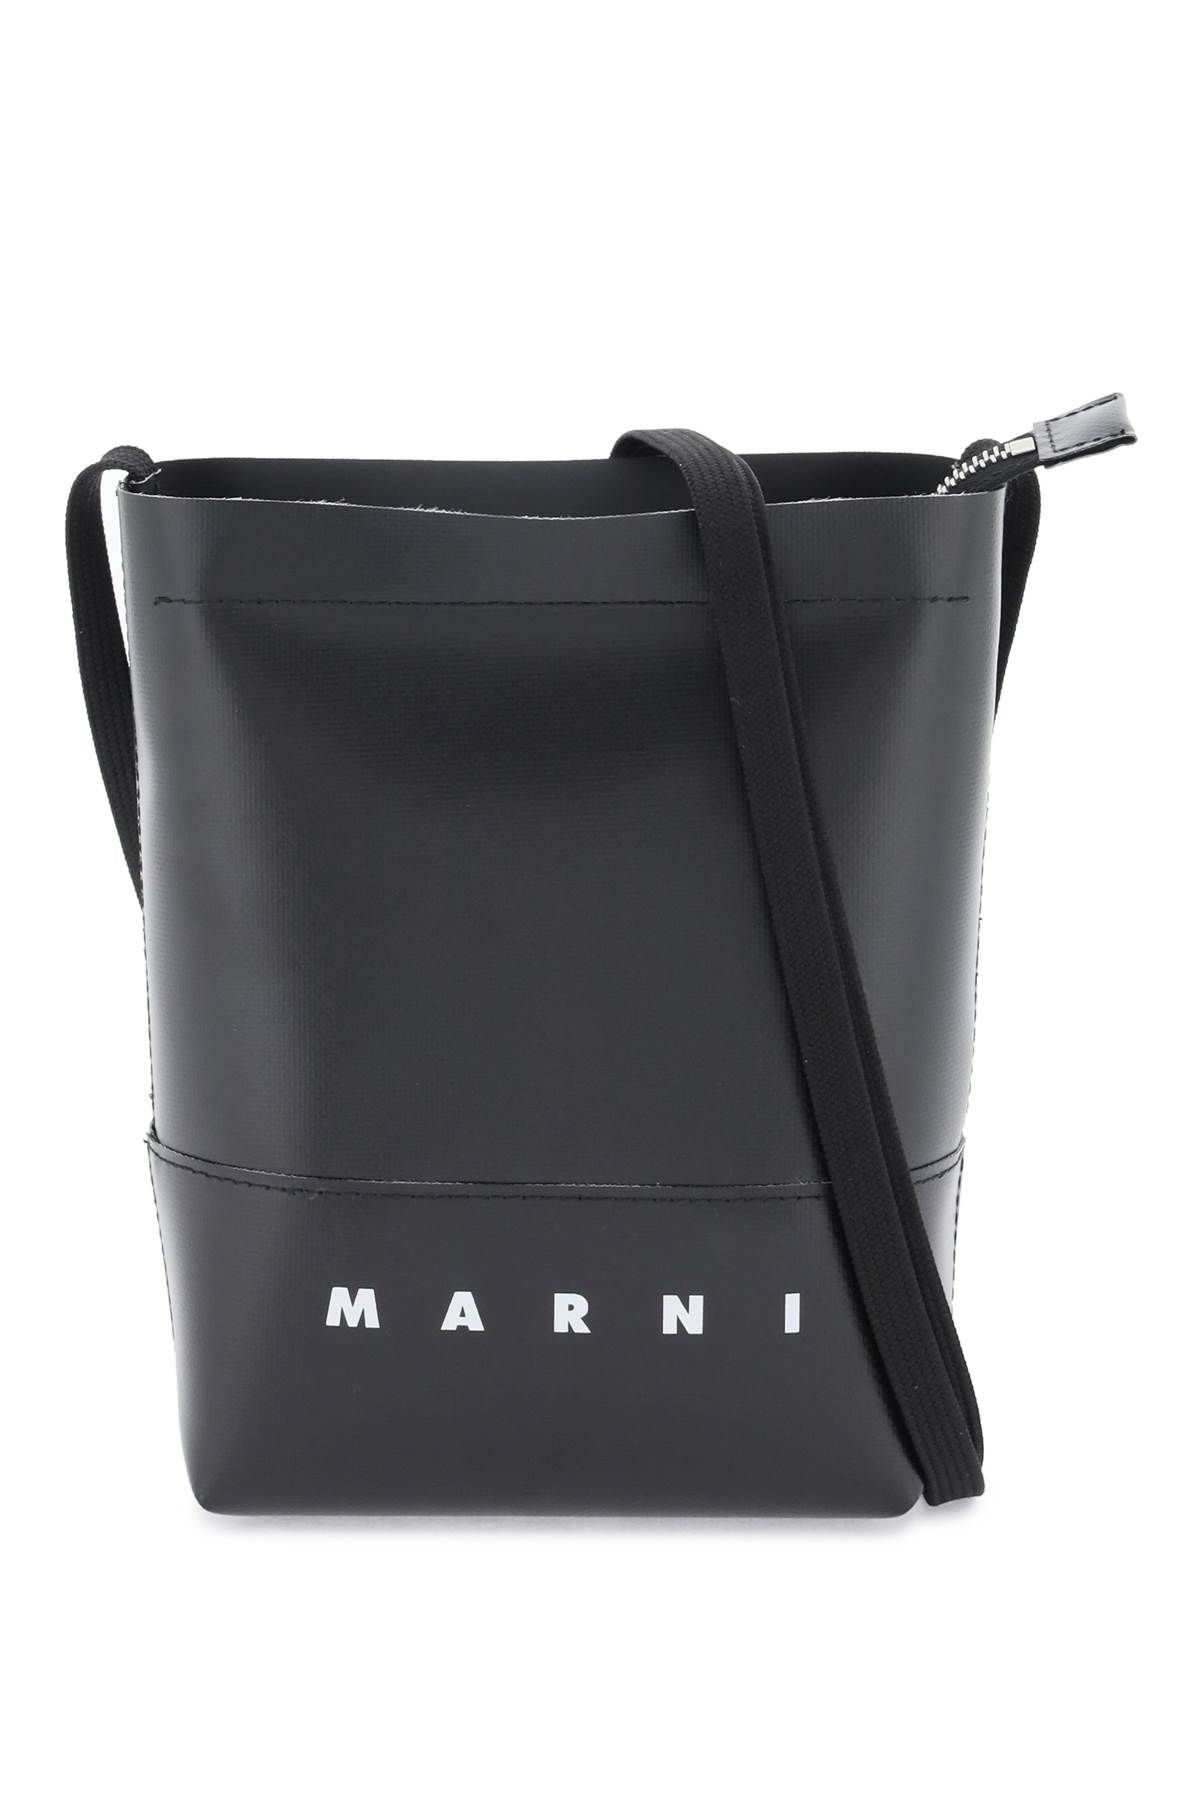 Marni MARNI coated canvas crossbody bag